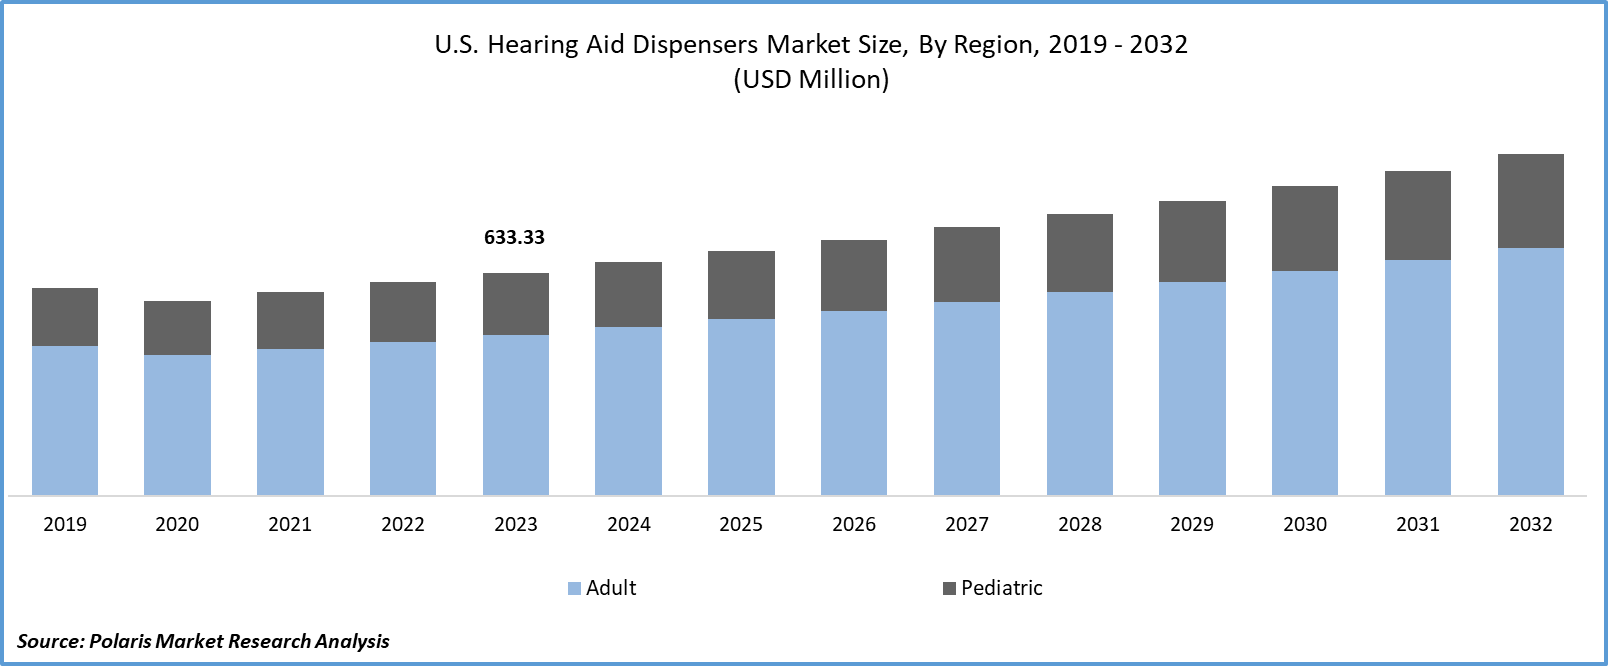 U.S. Hearing Aid Dispensers Market Size